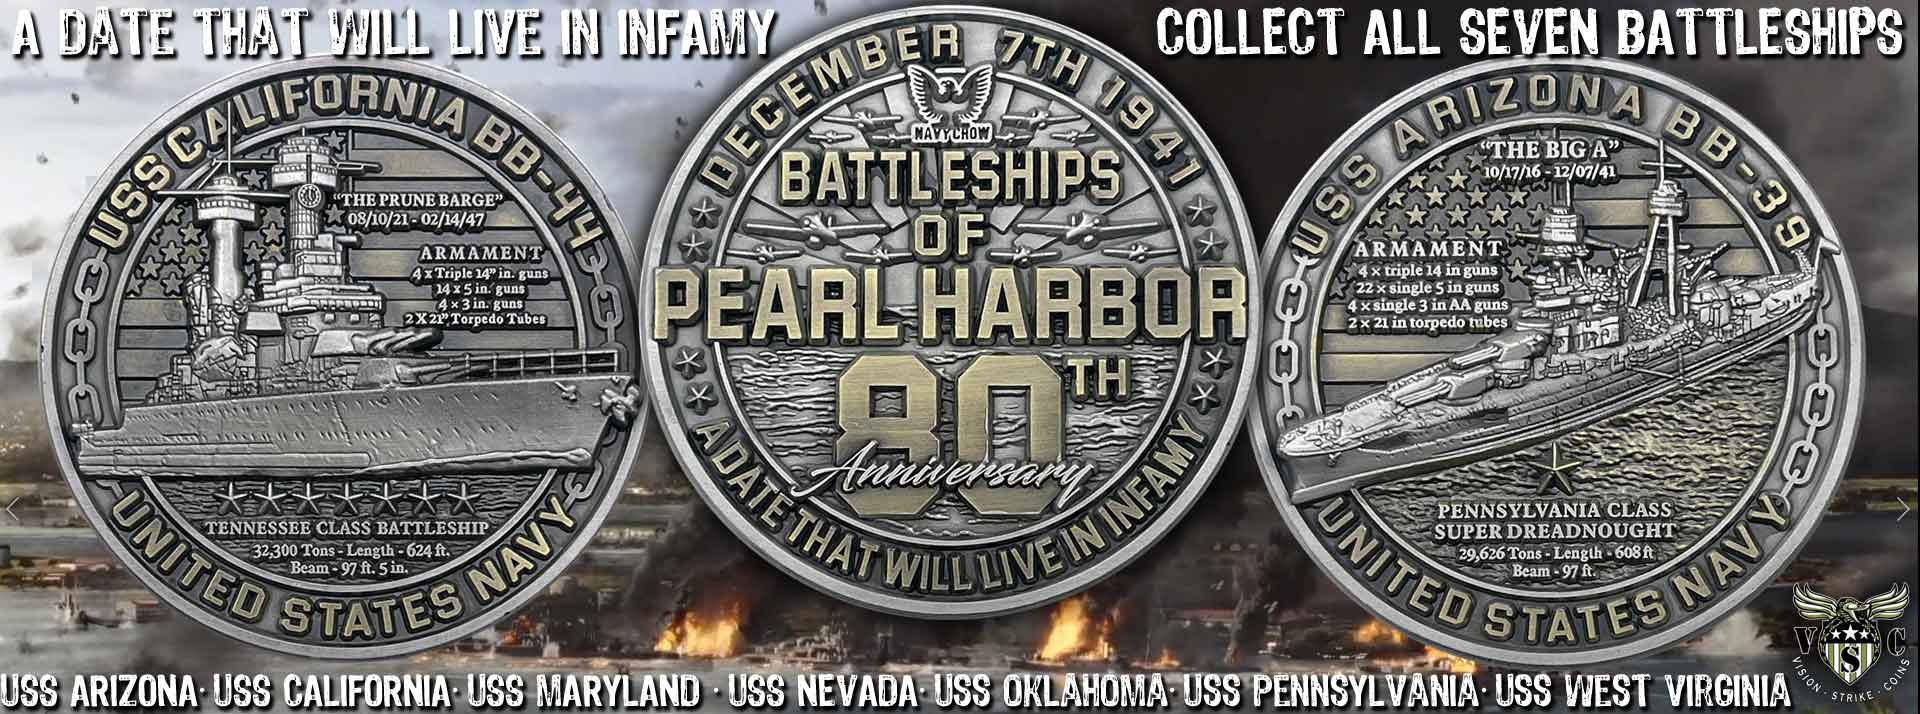 Pearl harbor 80th anniversary US Battleships Coins